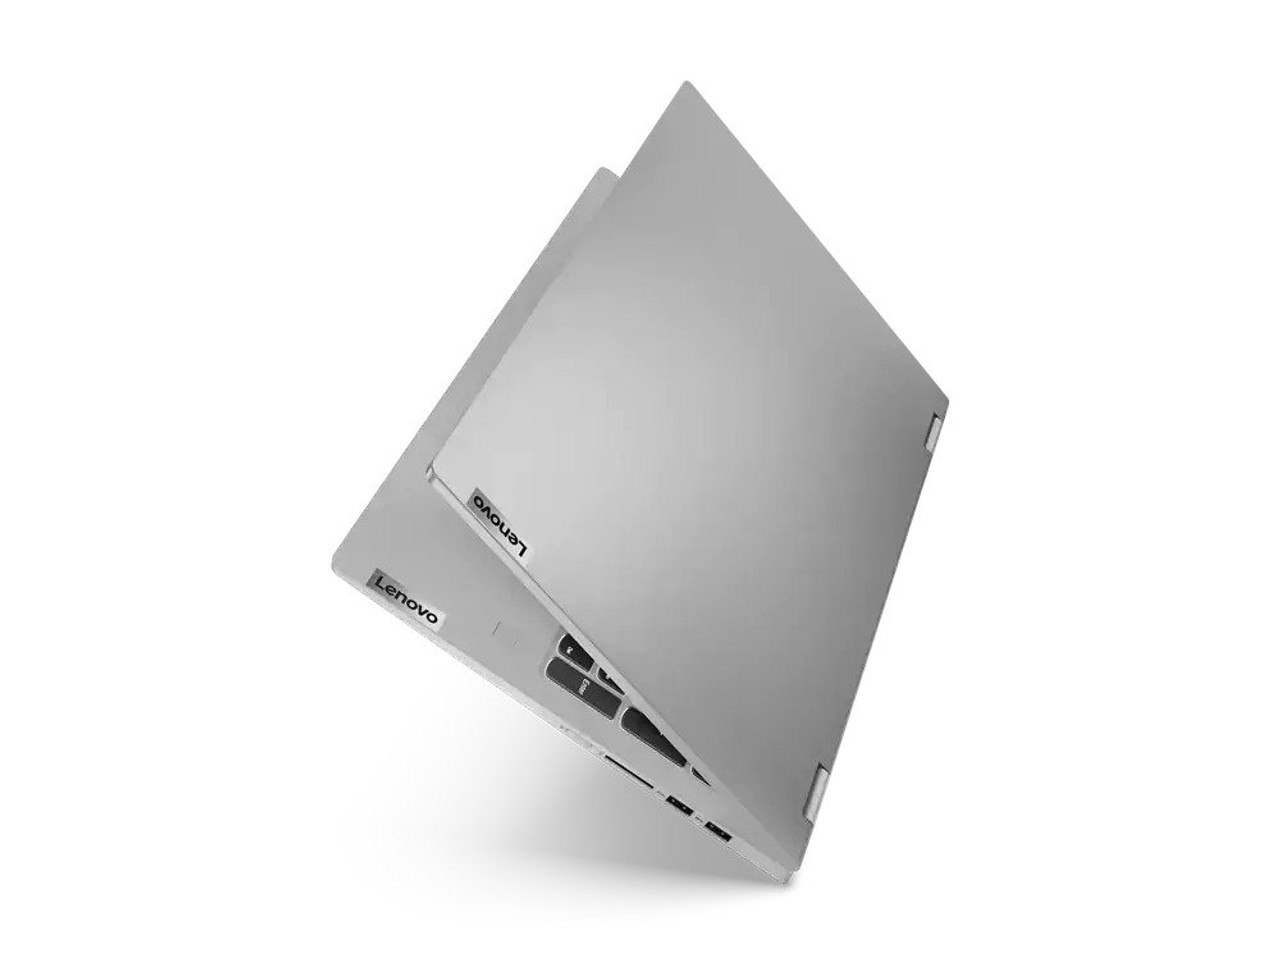 Lenovo IdeaPad Flex 5i 15.6" Laptop Intel Core i7-1065G7 16GB Ram 512GB SSD W10H | 81X3000VUS | Manufacturer Refurbished